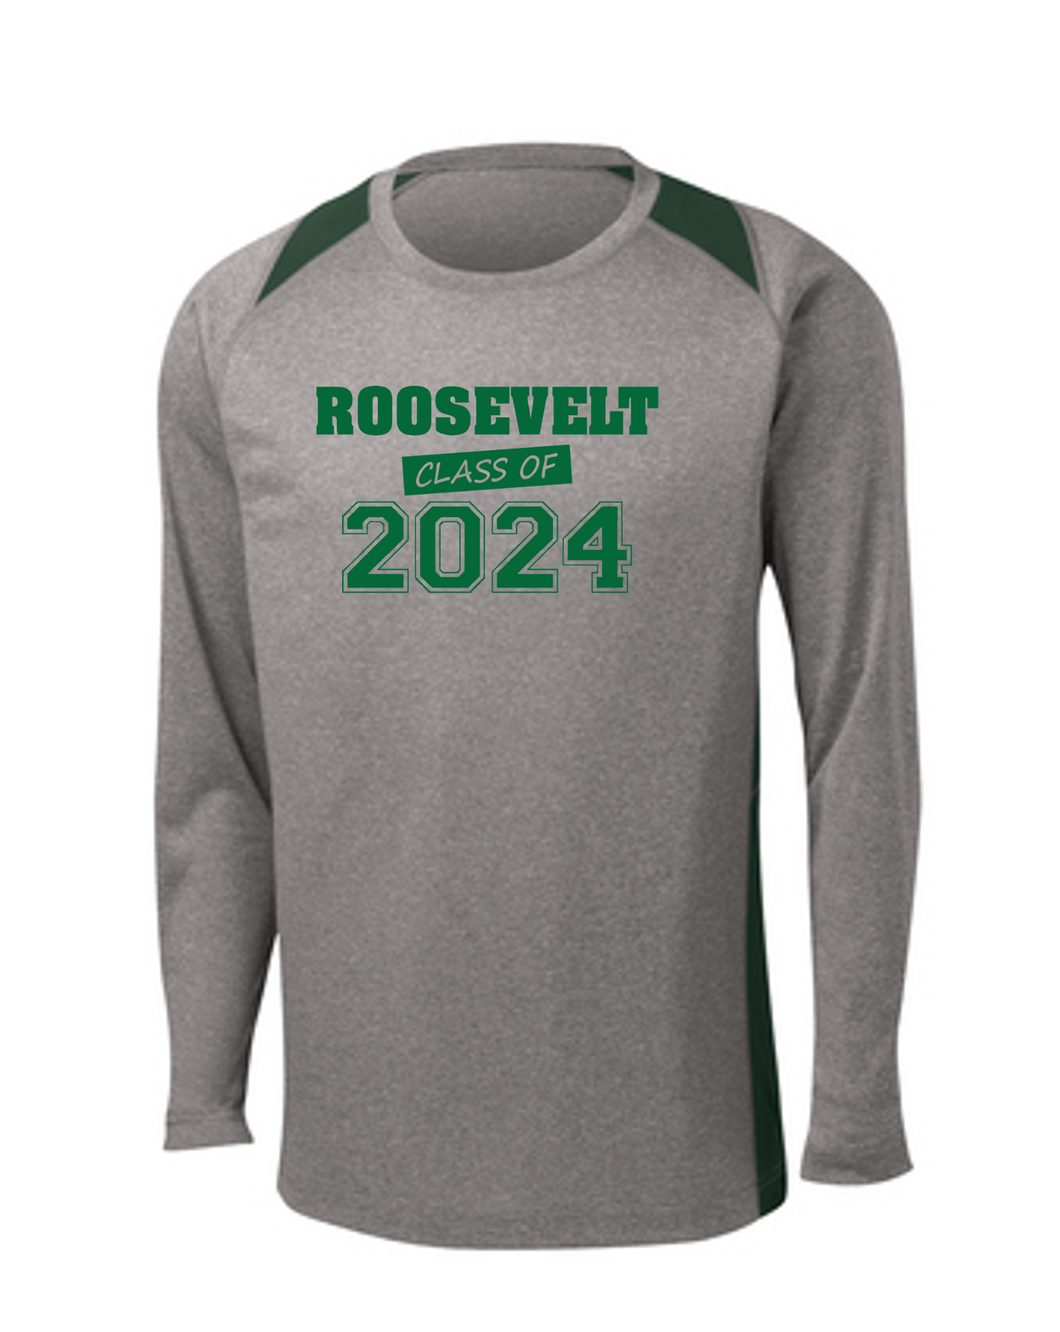 Sport-Tek® Long Sleeve Heather Colorblock Contender™ Tee - Roosevelt Class of 2024